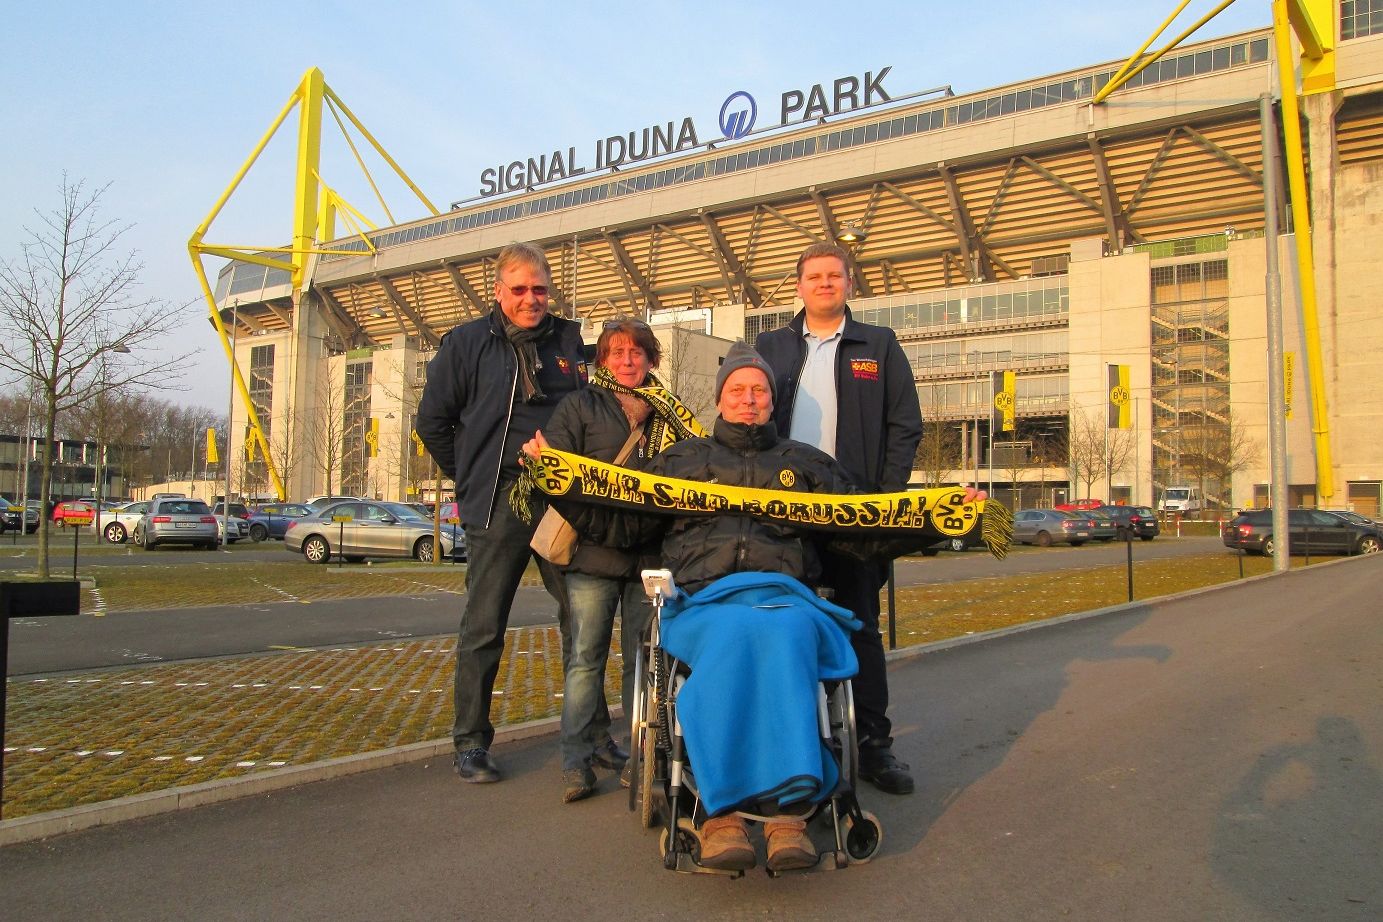 Herr G. bei Borussia Dortmund.jpg